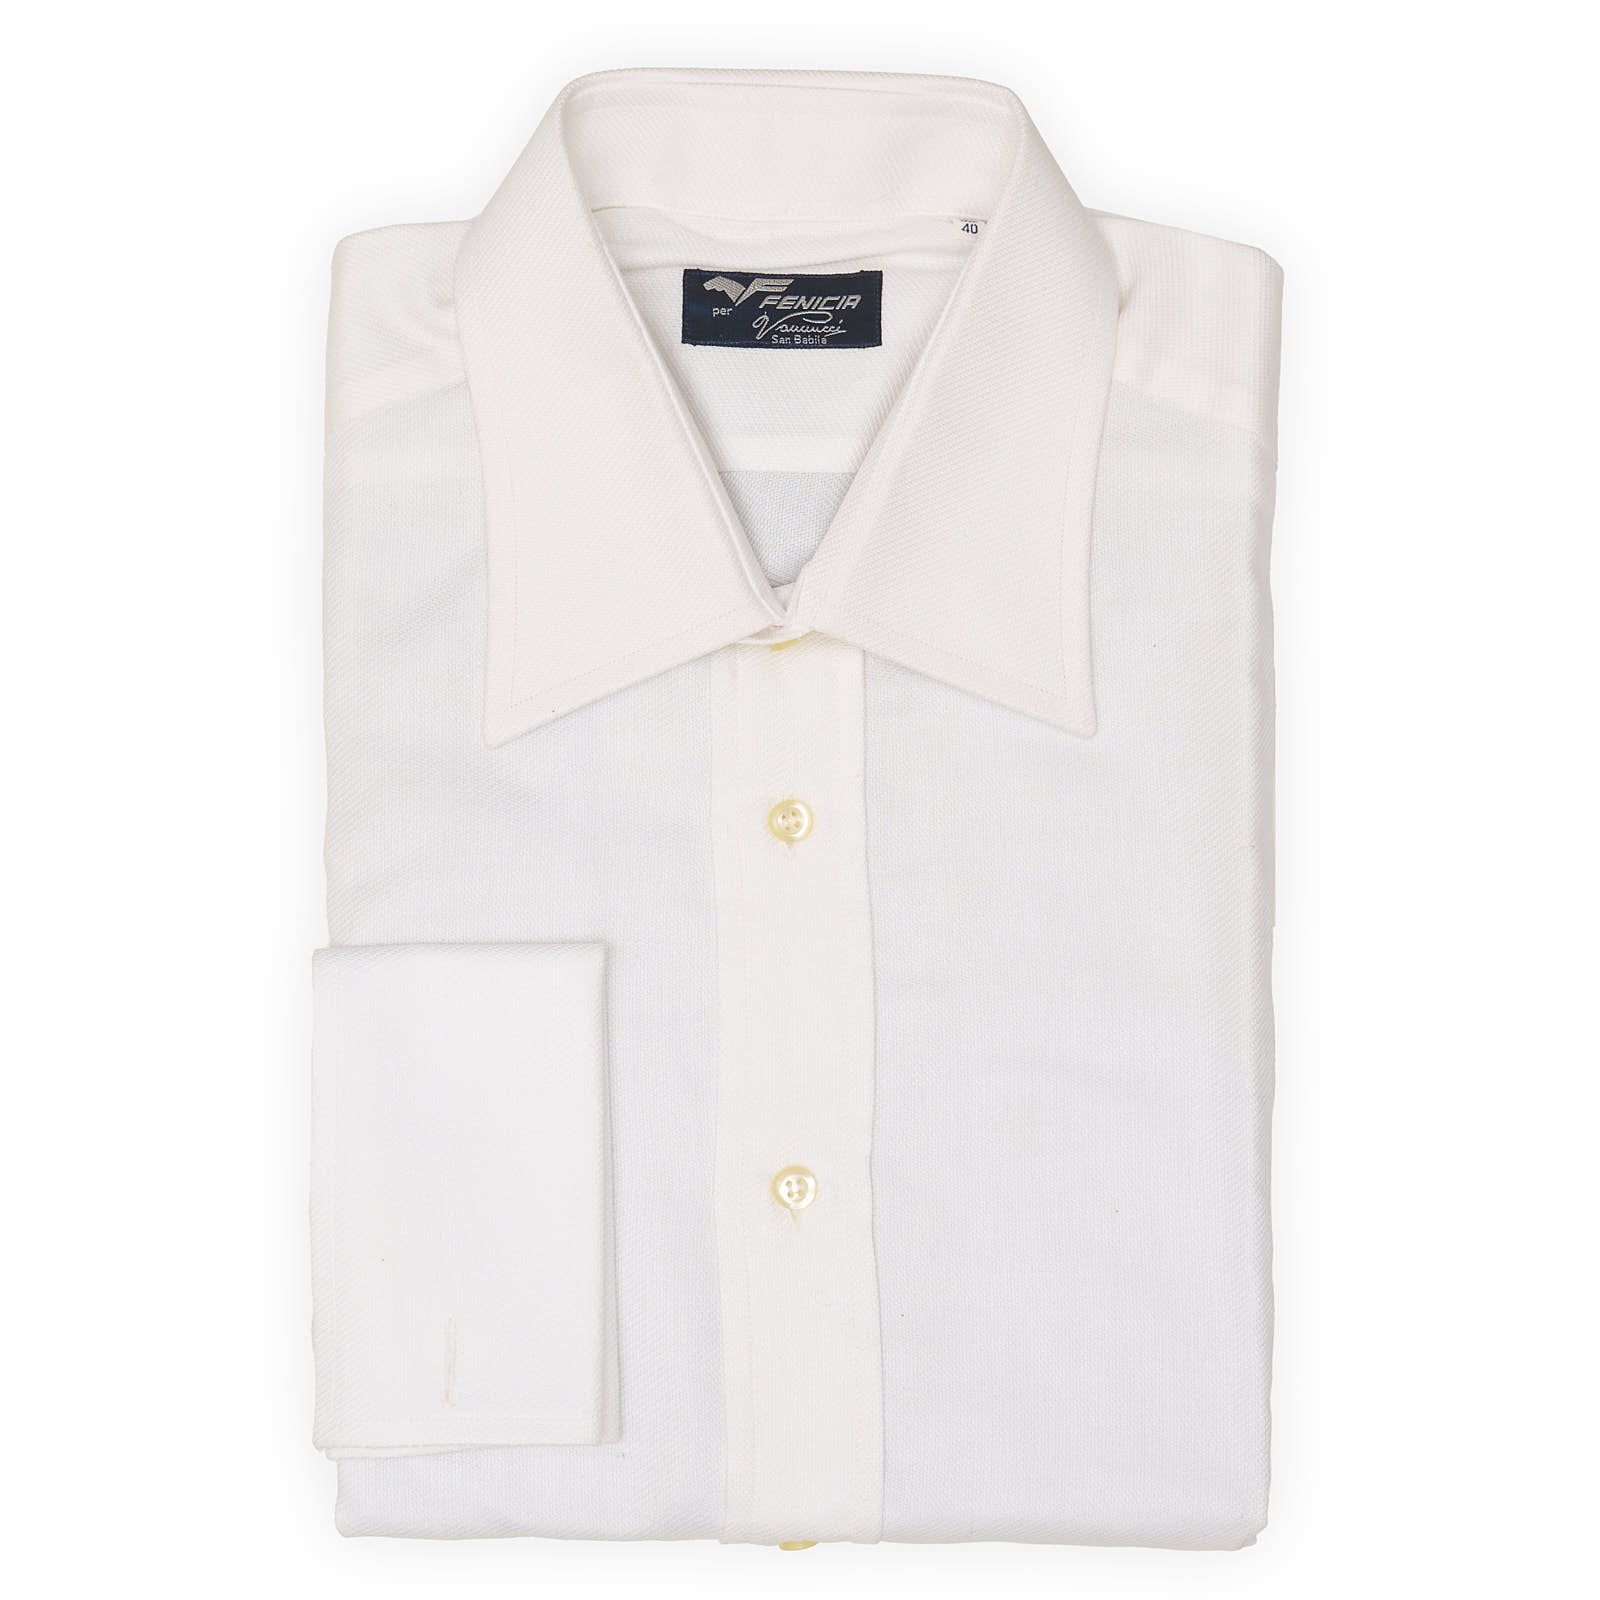 FENICIA for Vannucci White Royal Oxford Cotton Dress Shirt EU 40 NEW US 15.75